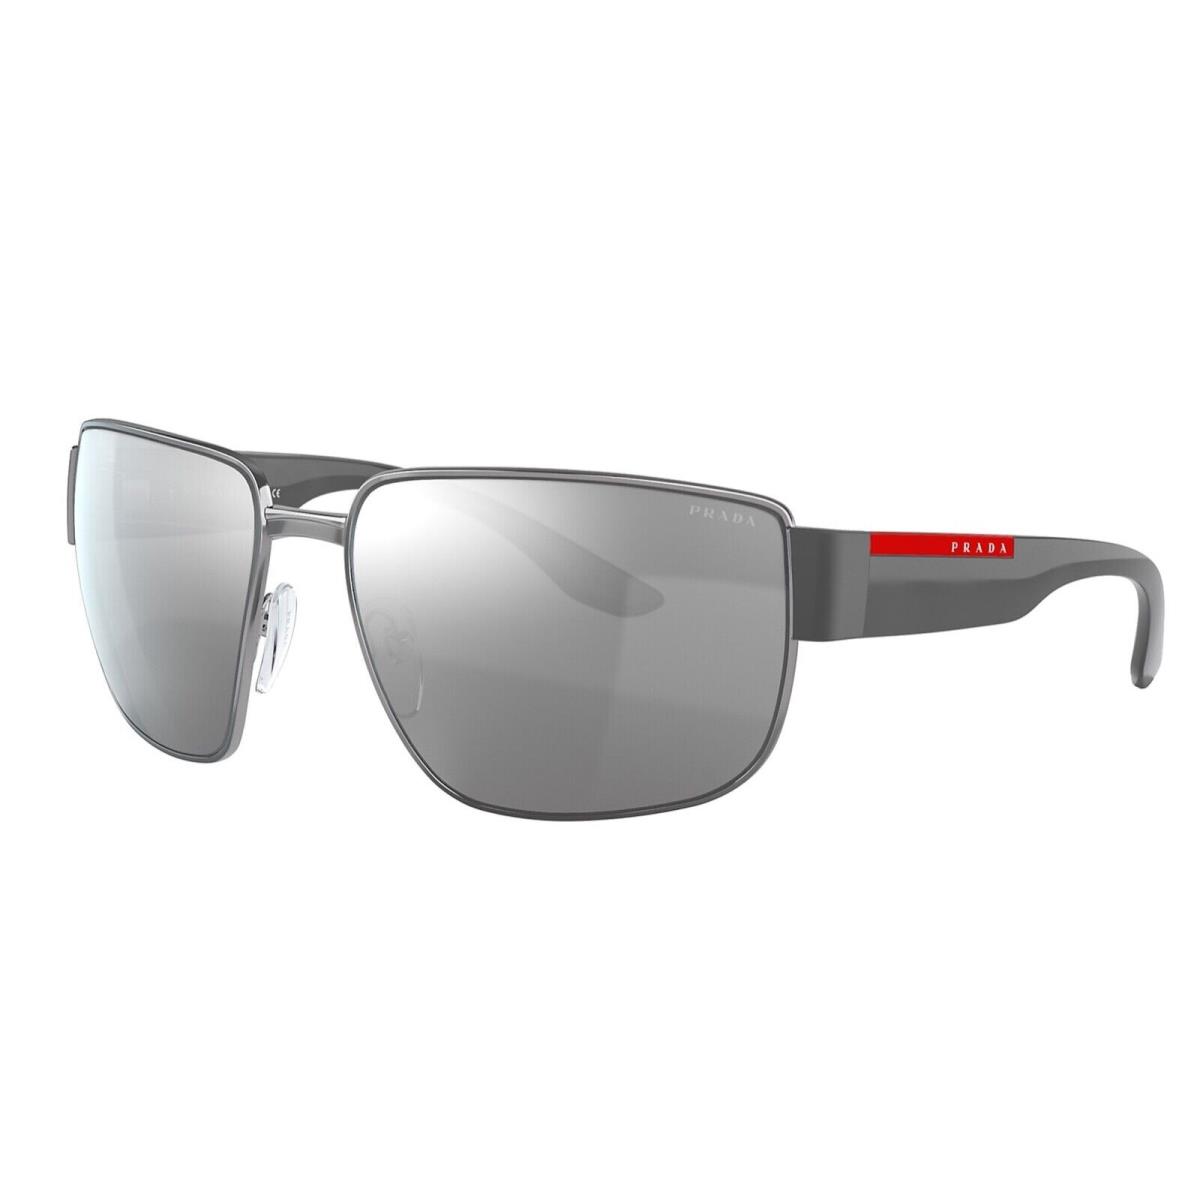 Mens Prada Linea Rossa PS56VS 5AV09F Sunglasses - Gunmental Size 62 mm